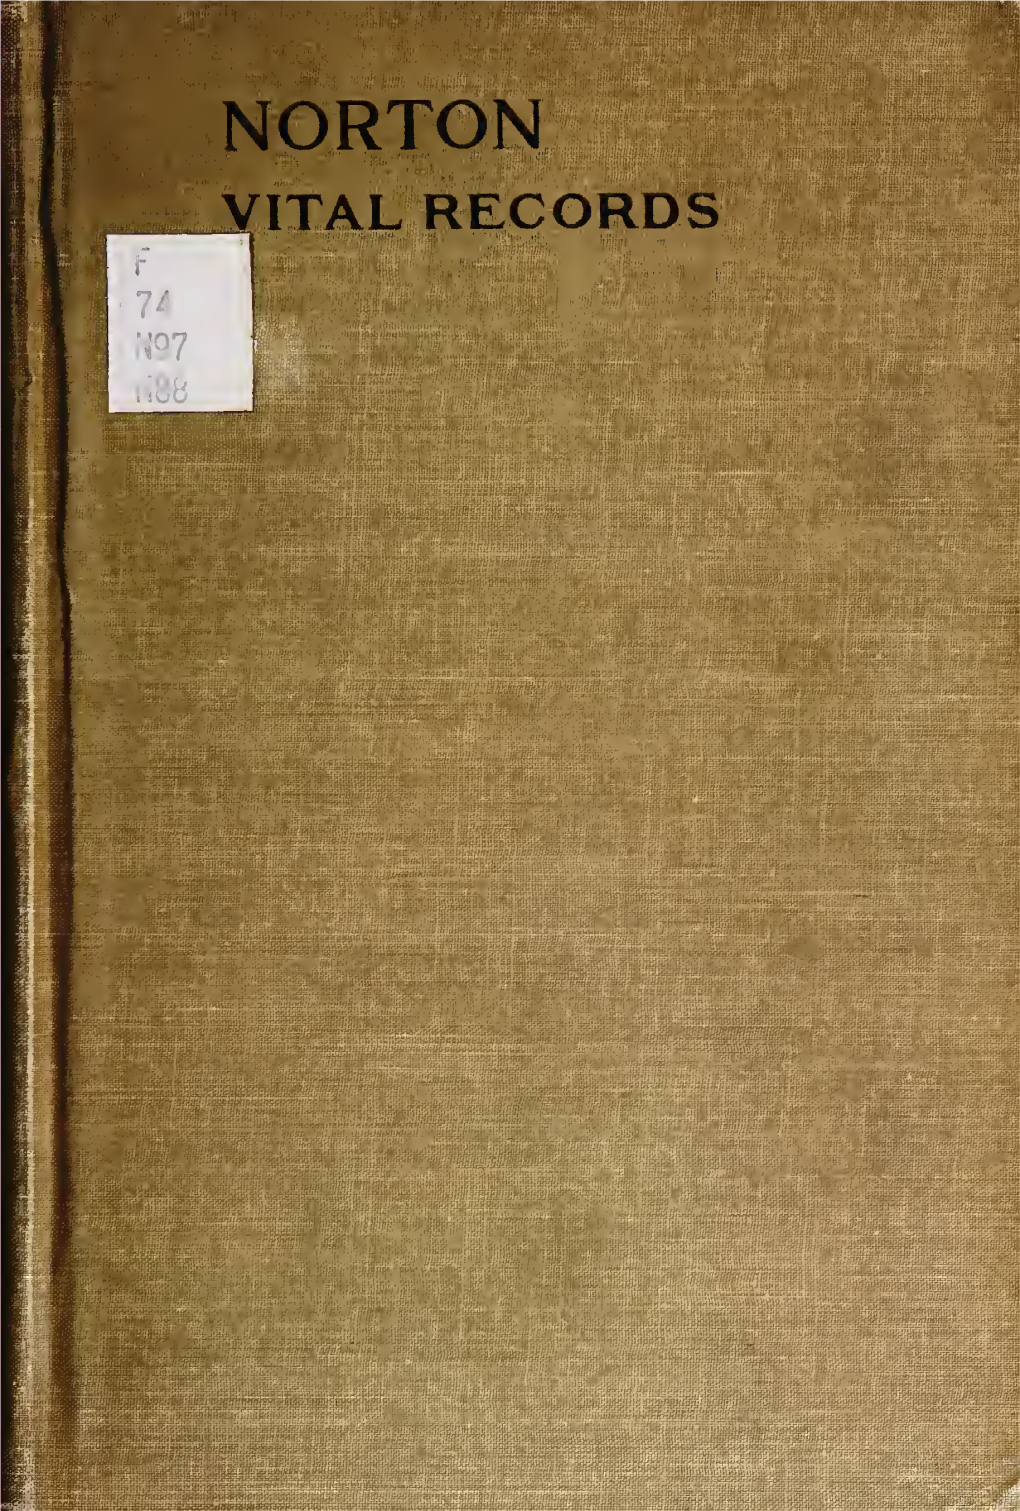 Vital Records of Norton, Massachusetts, to the Year 1850